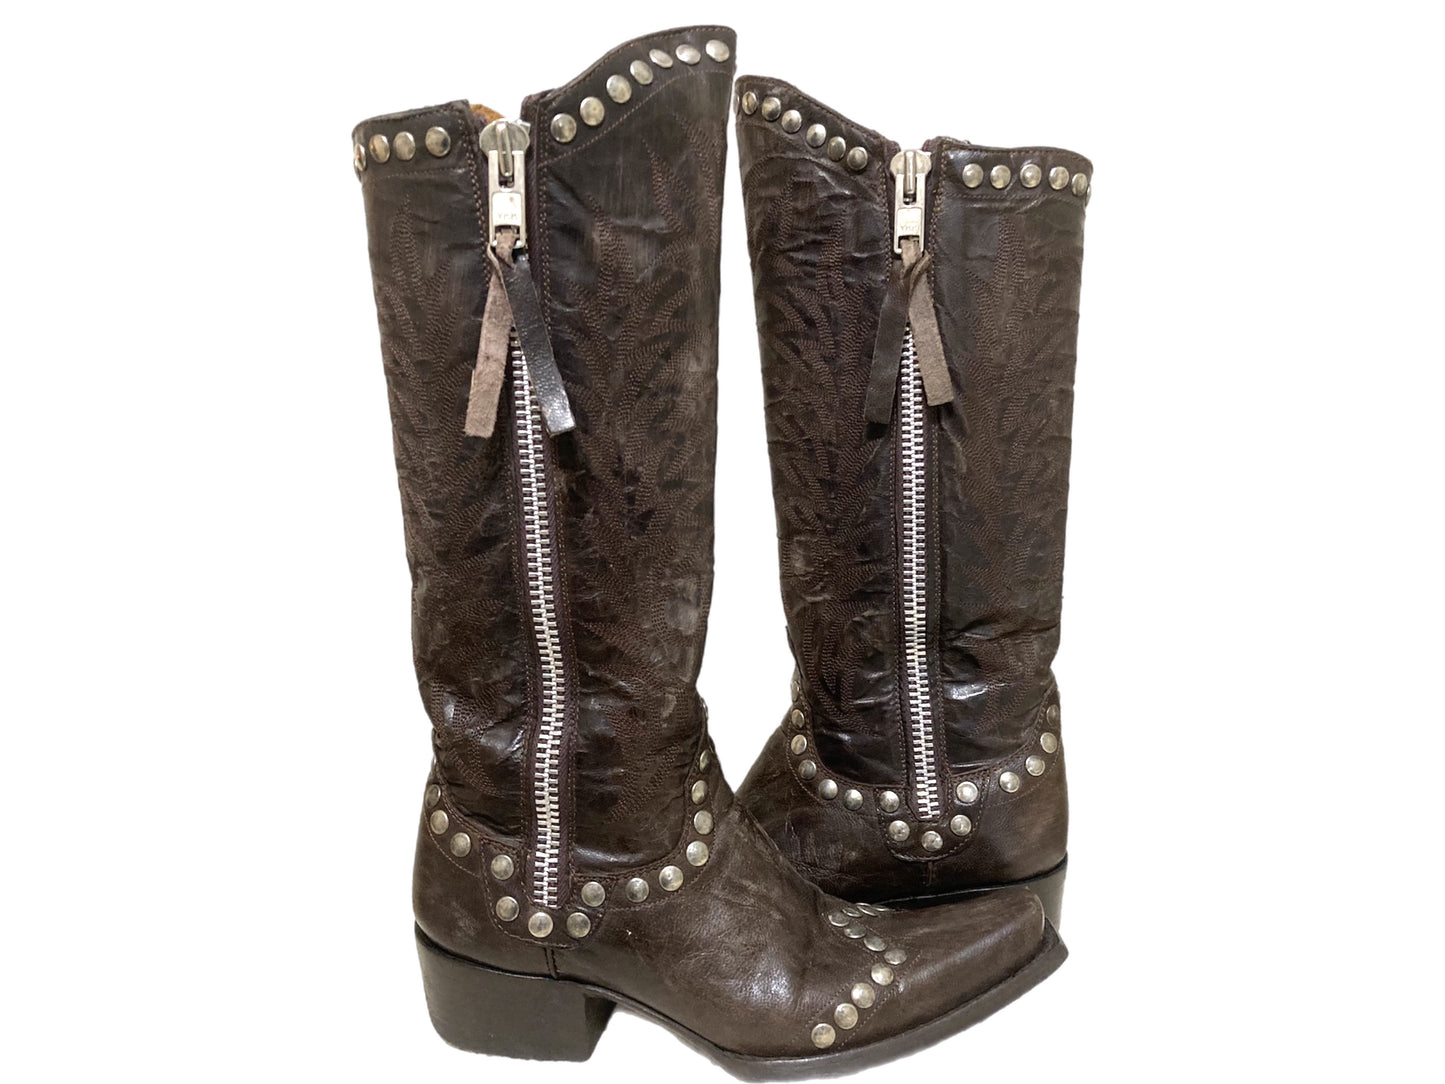 OLD GRINGO Leather Rock Raze Cowboy Boots Brown Size 5.5